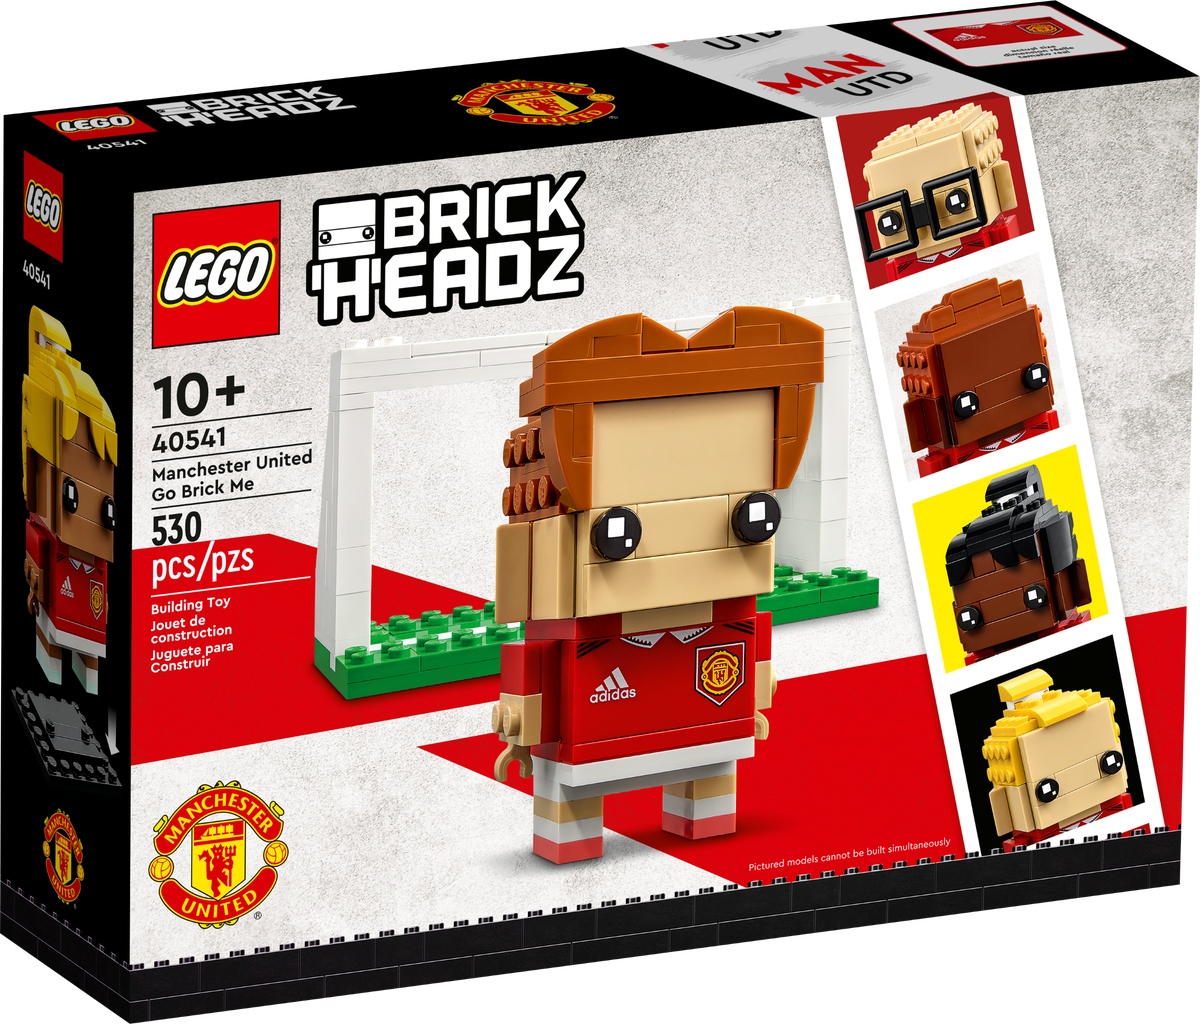 40541: Manchester United Go Brick Me